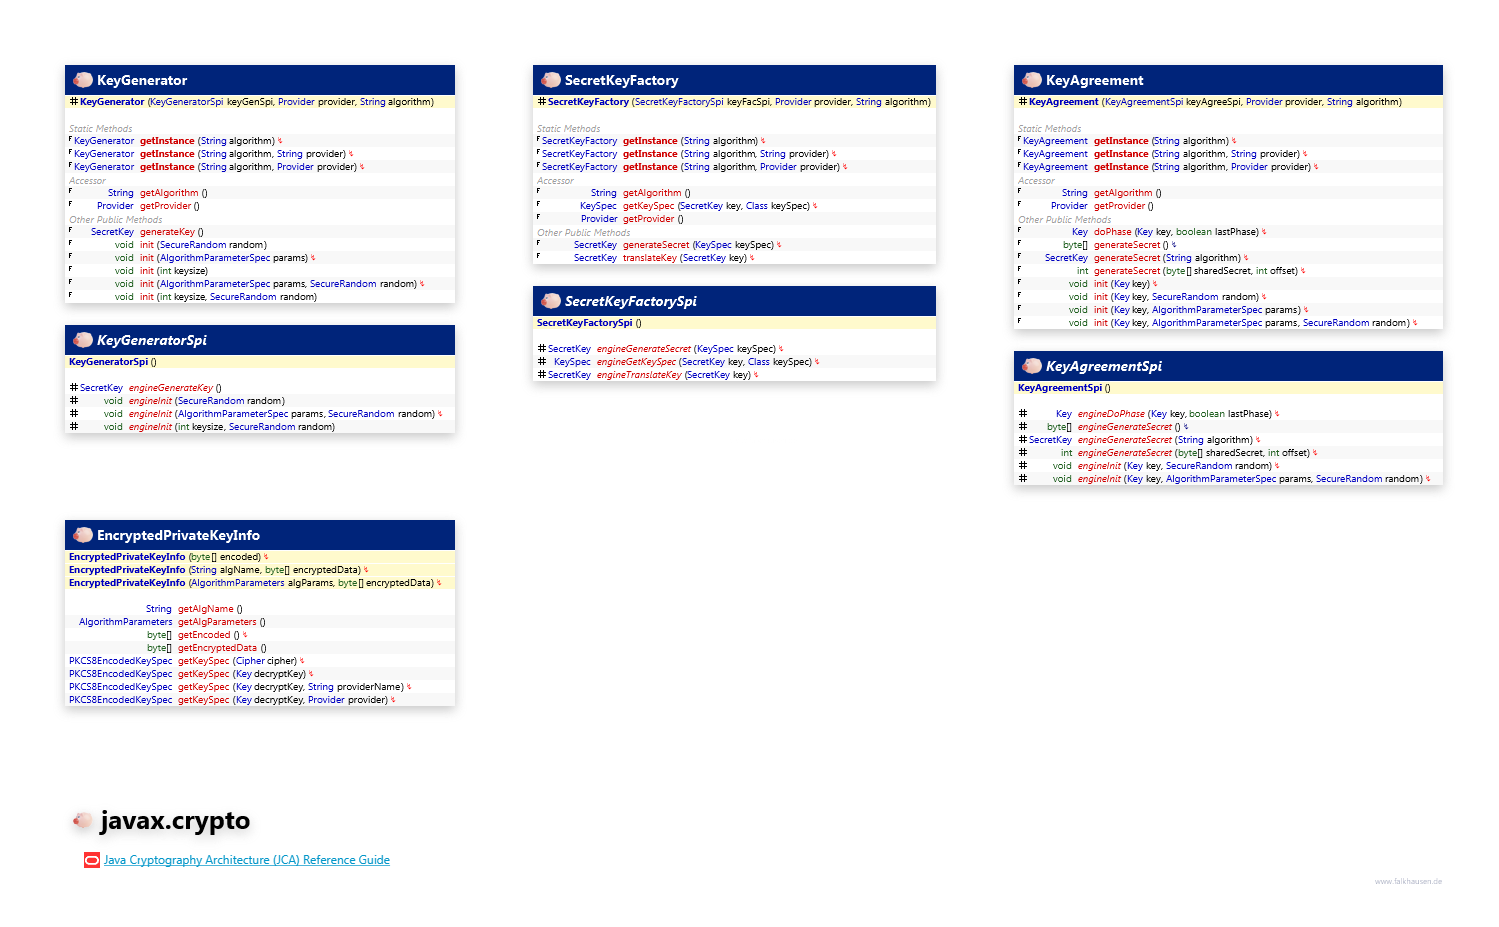 javax.crypto KeyManagement class diagram and api documentation for Java 7